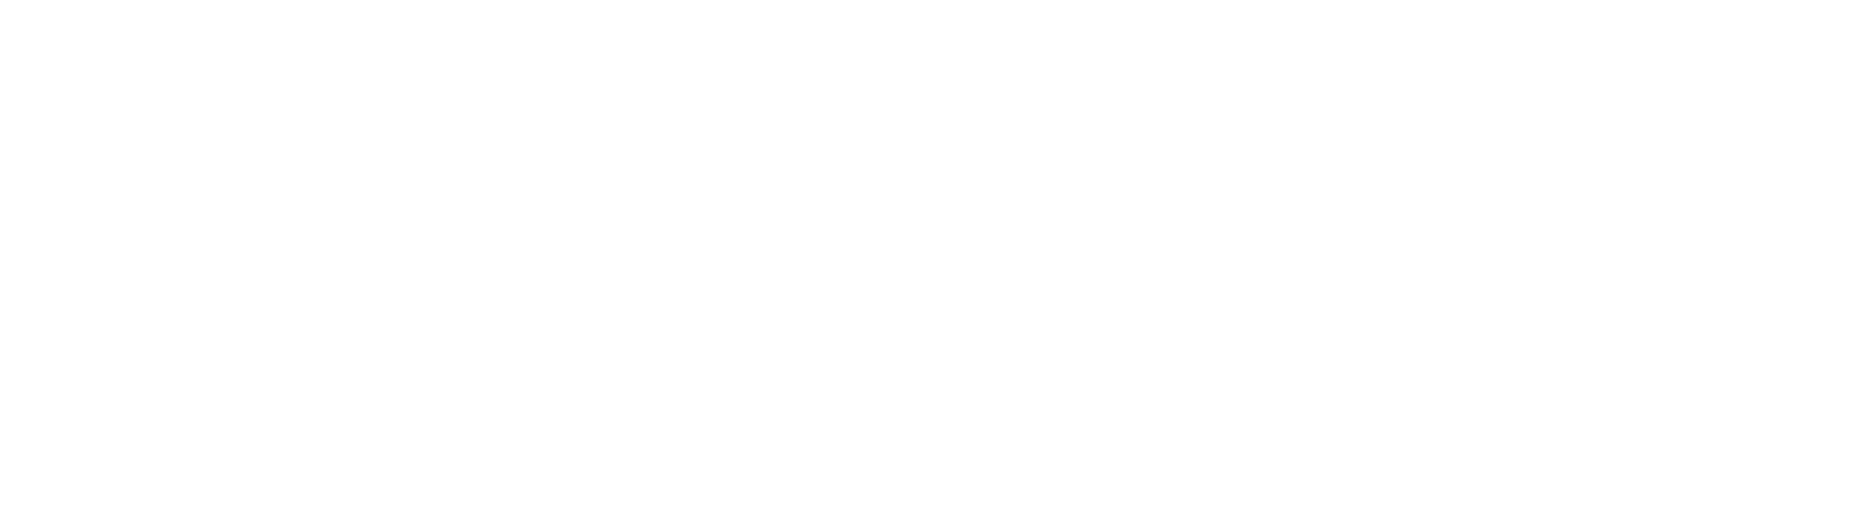 clarity-logo-white